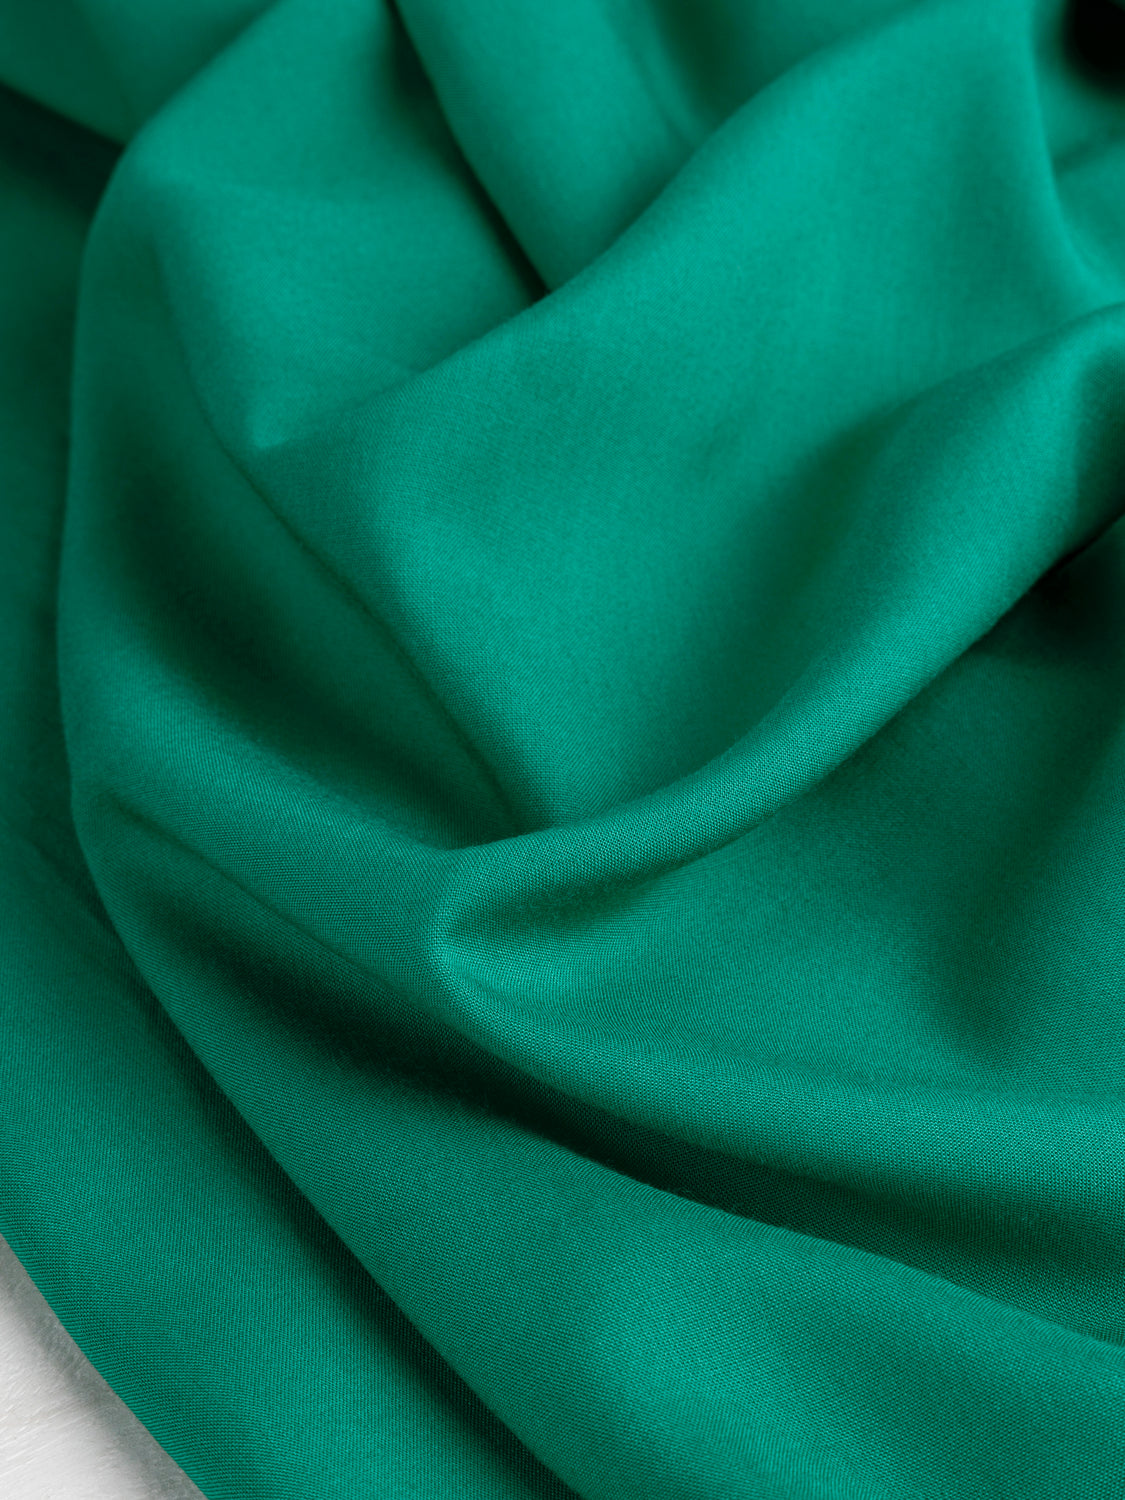 Signature Jewel Tone EcoVero Viscose - Emerald | Core Fabrics